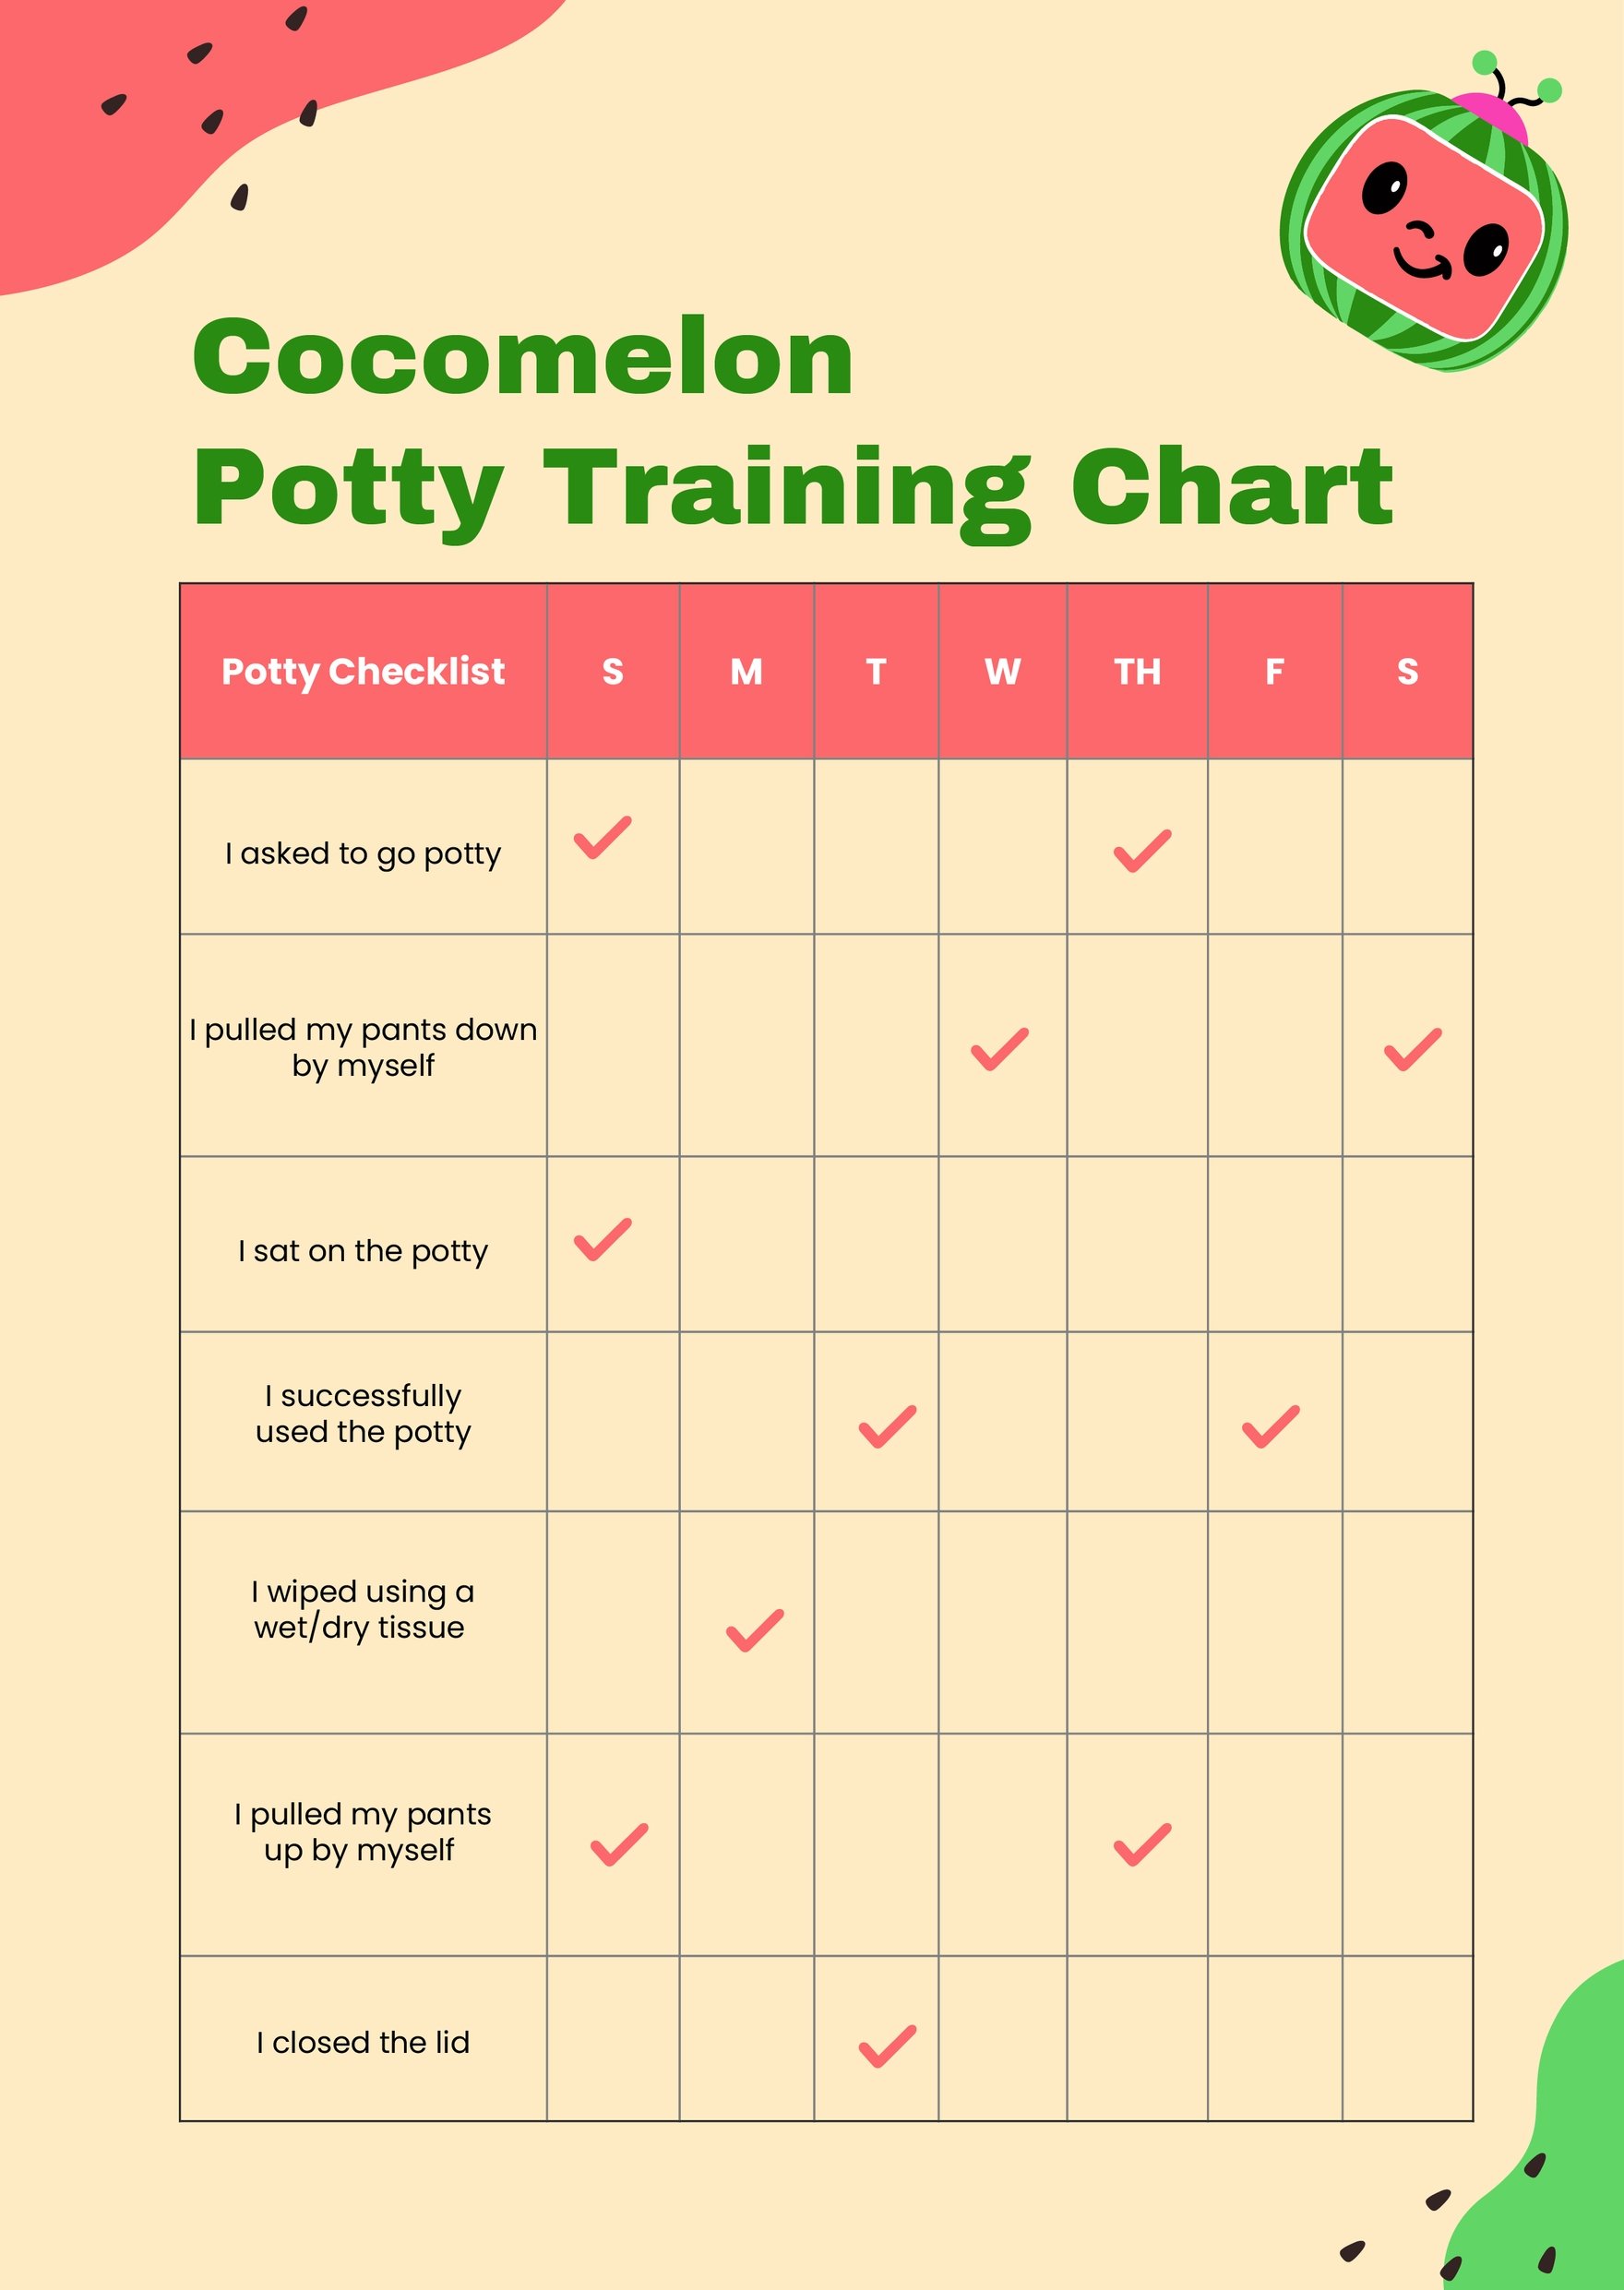 Cocomelon Potty Training Chart